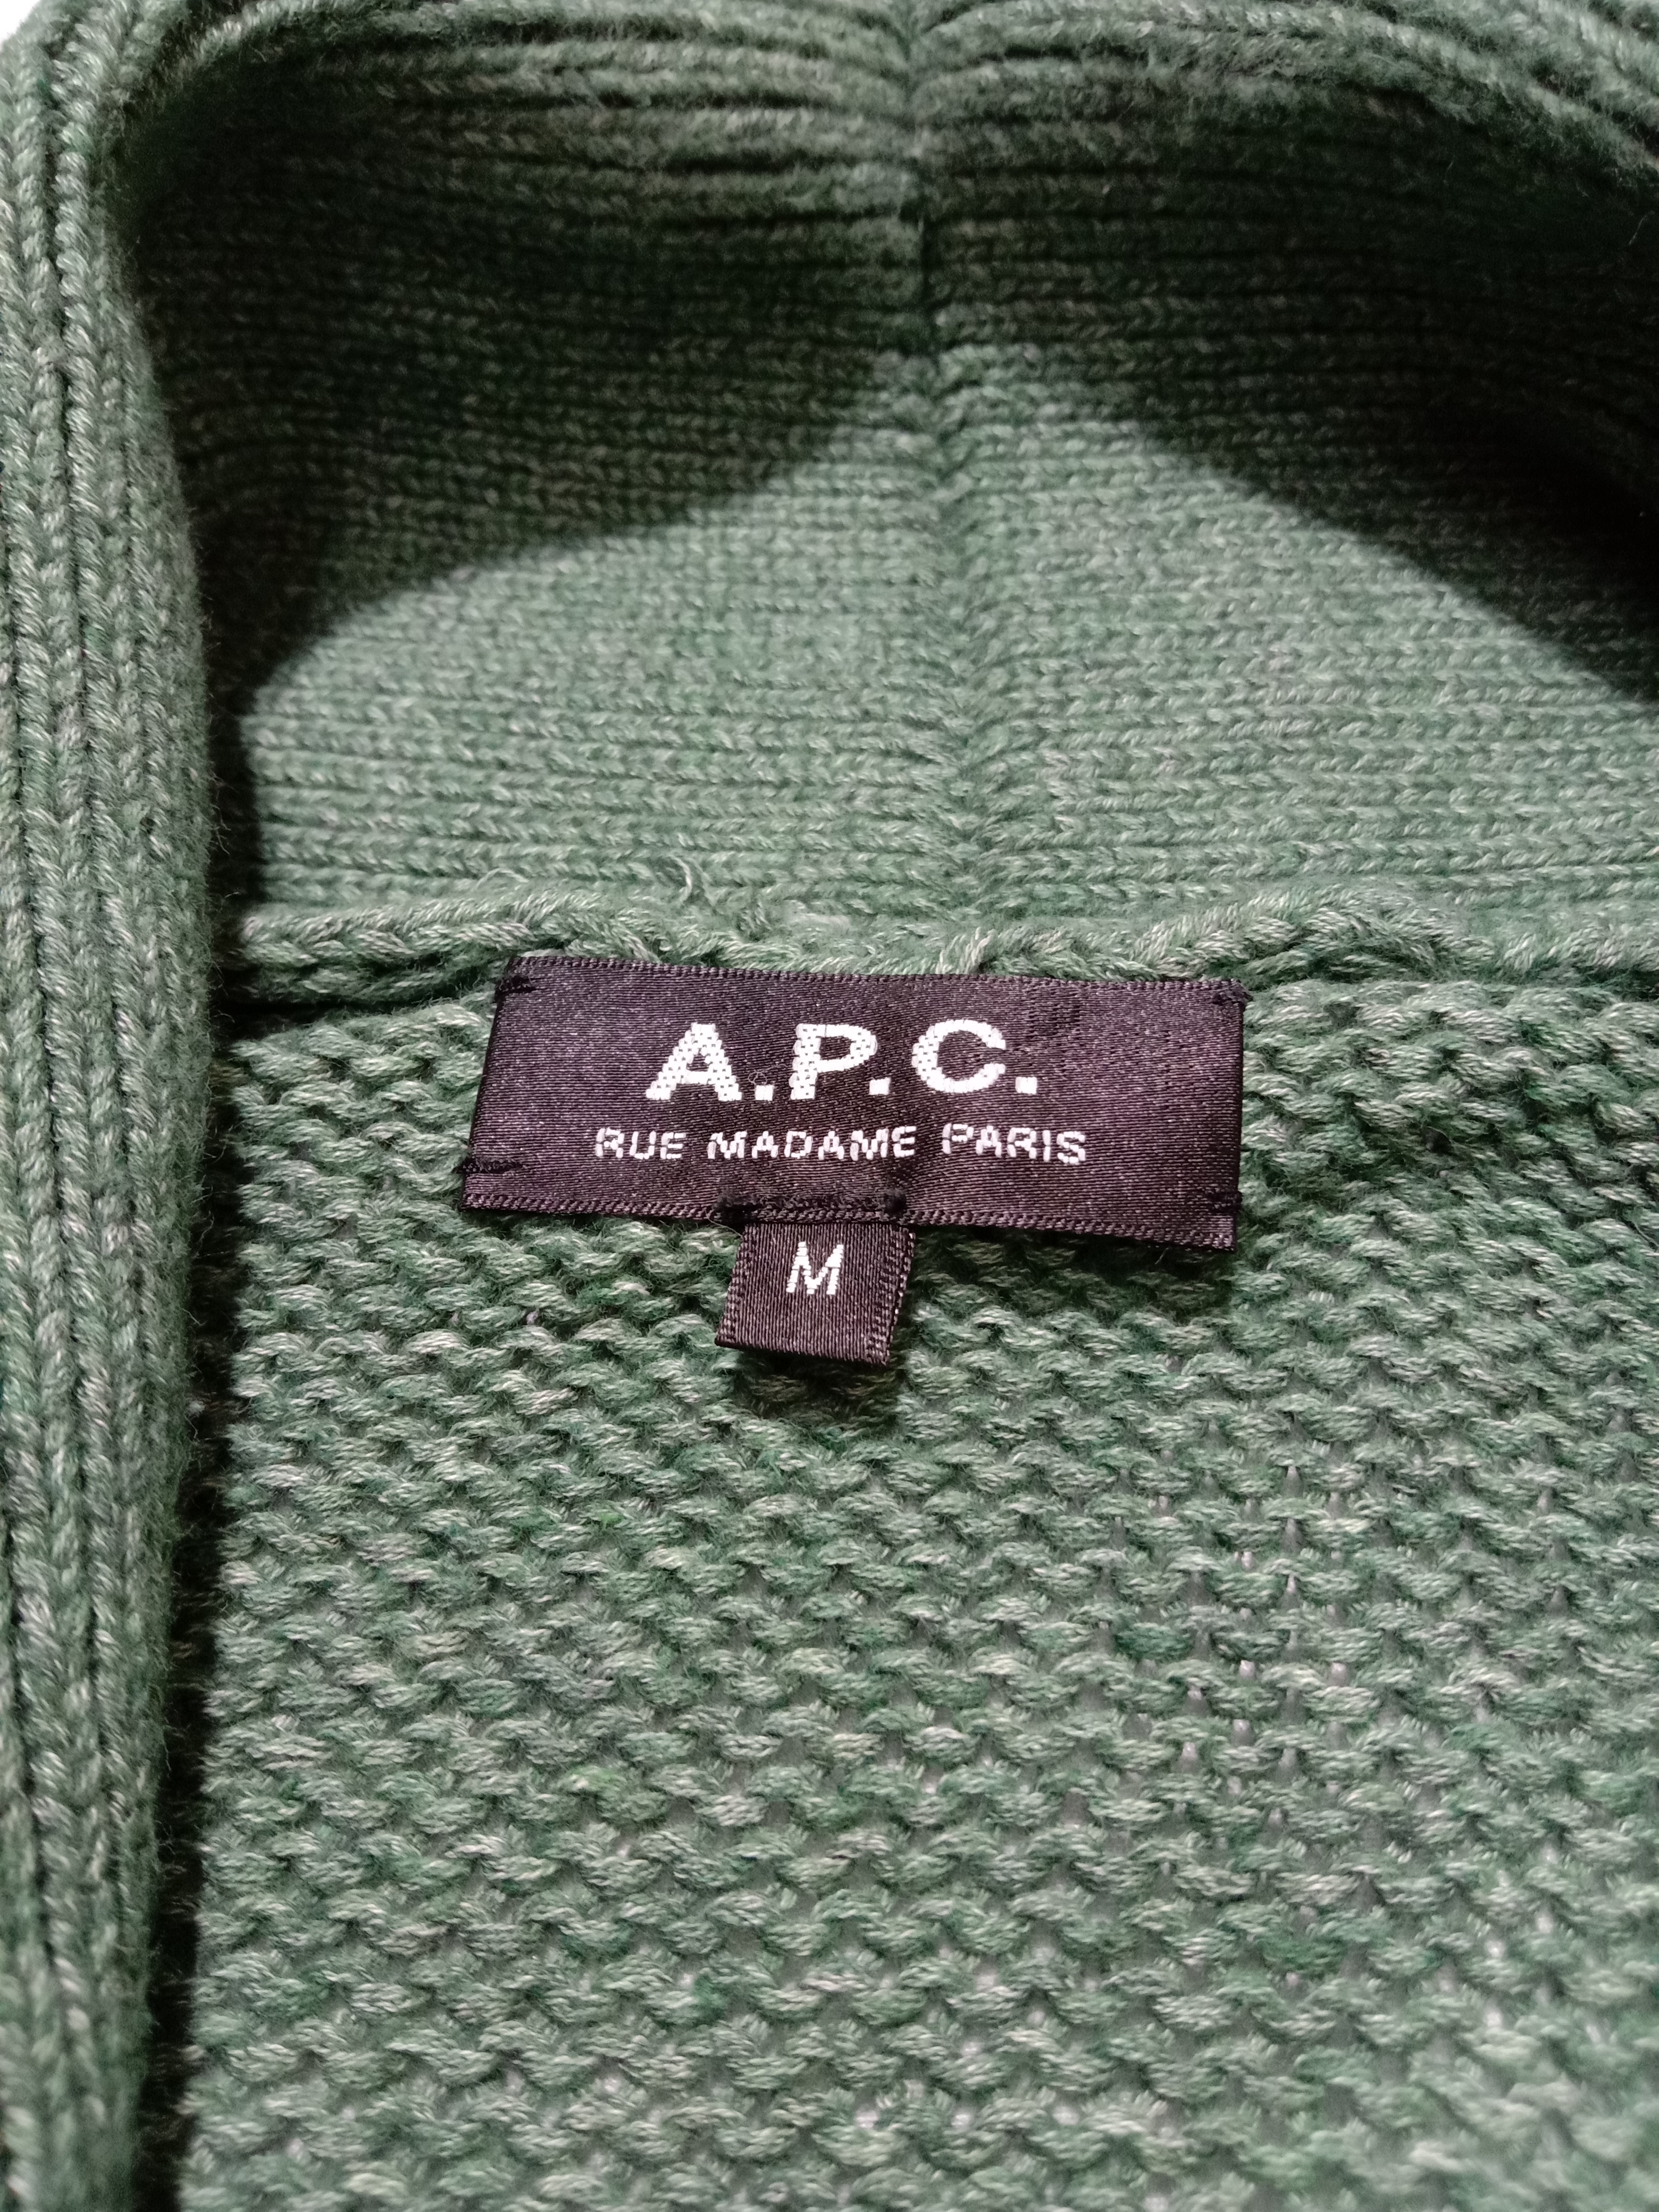 A.P.C Japan Rue Madame Paris Green Knitwear Cardigan Jacket - 4